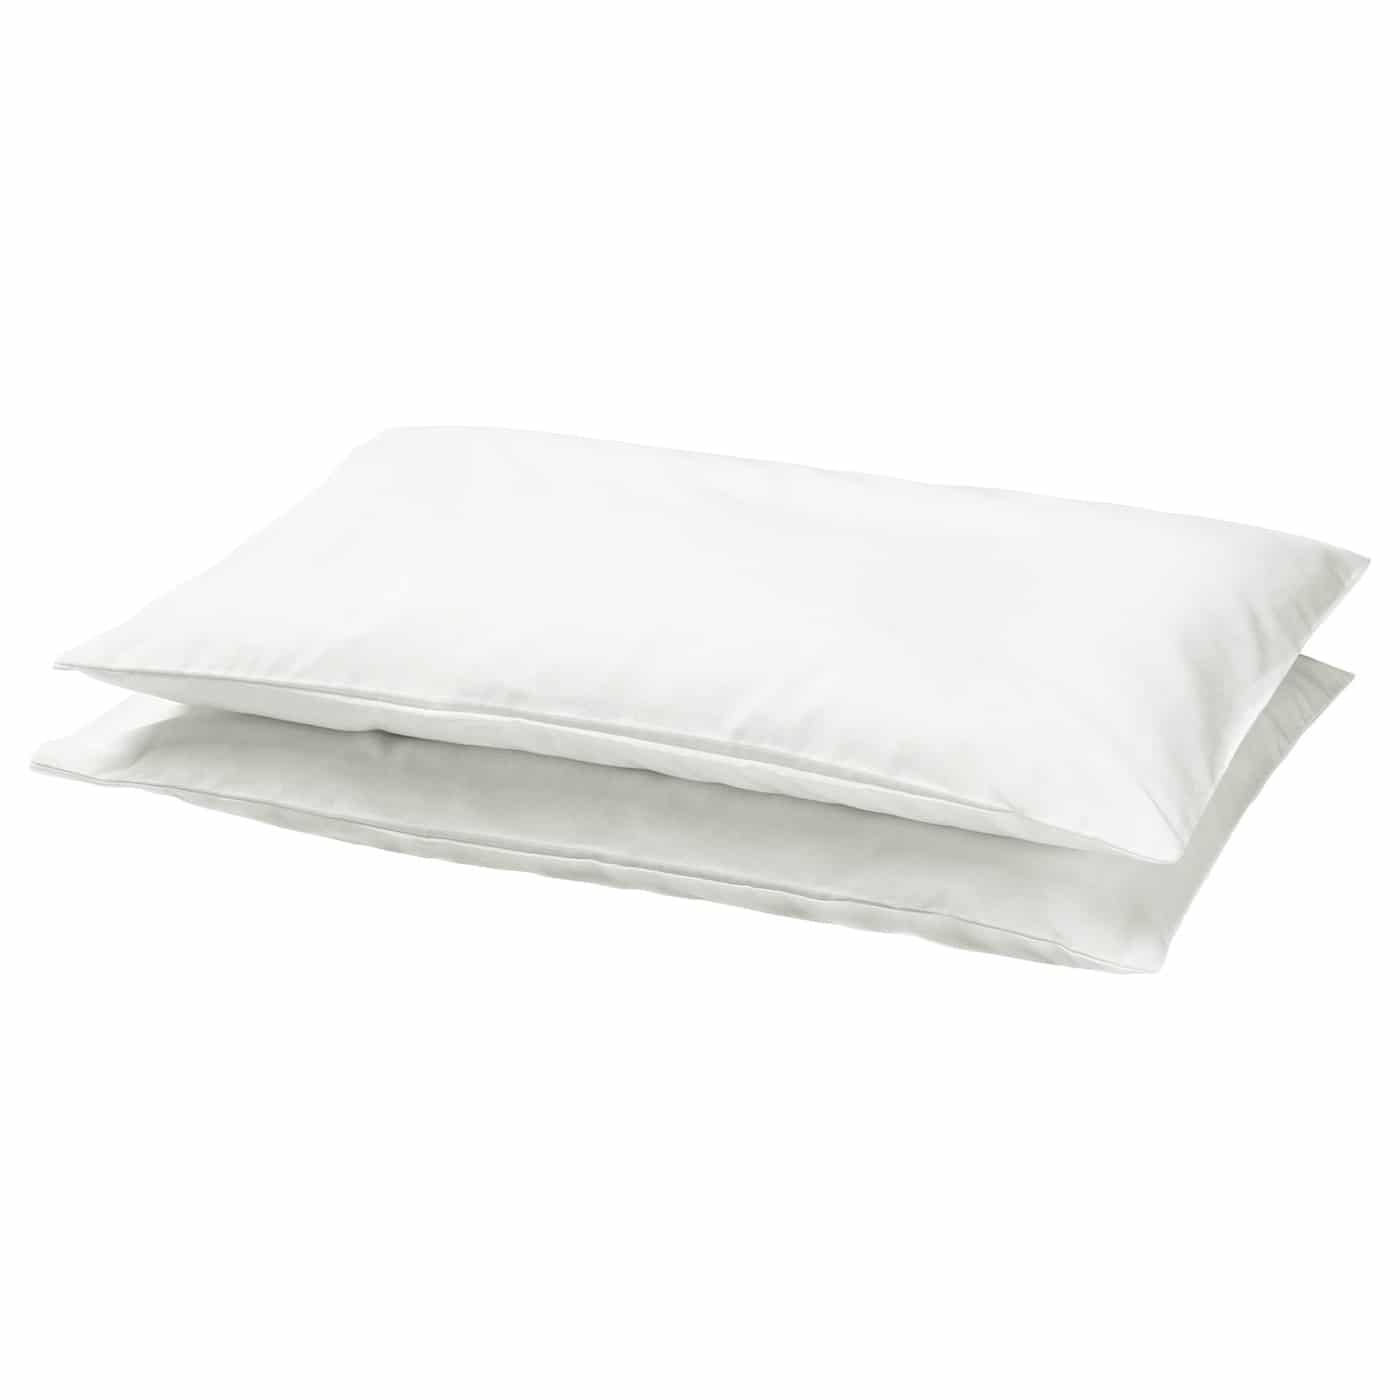 len-pillowcase-for-cot-white__0605353_PE681729_S5